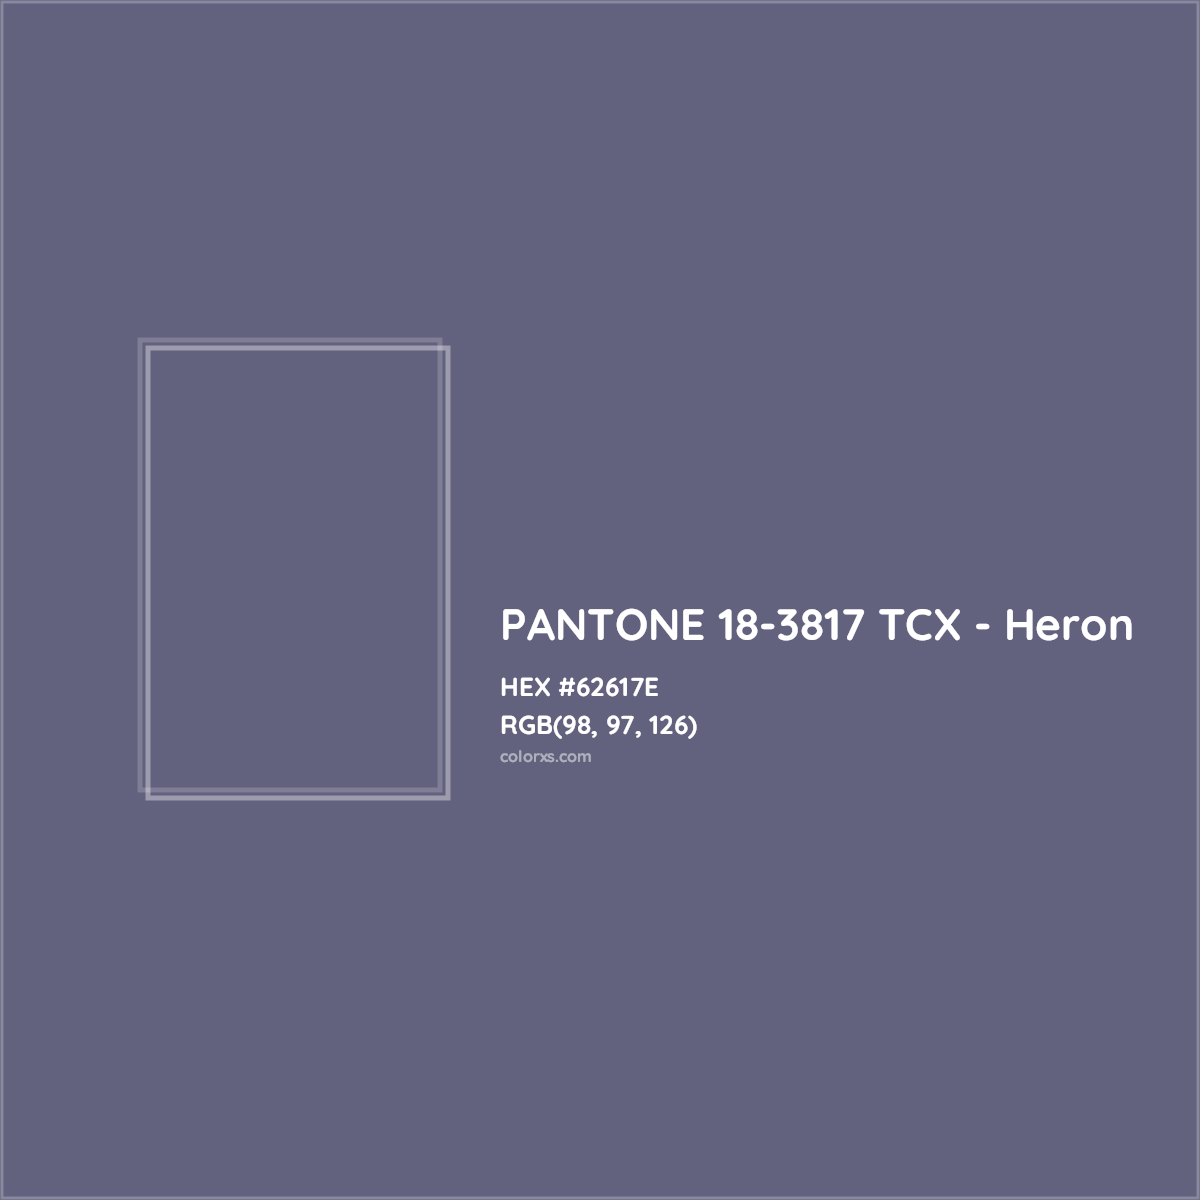 HEX #62617E PANTONE 18-3817 TCX - Heron CMS Pantone TCX - Color Code